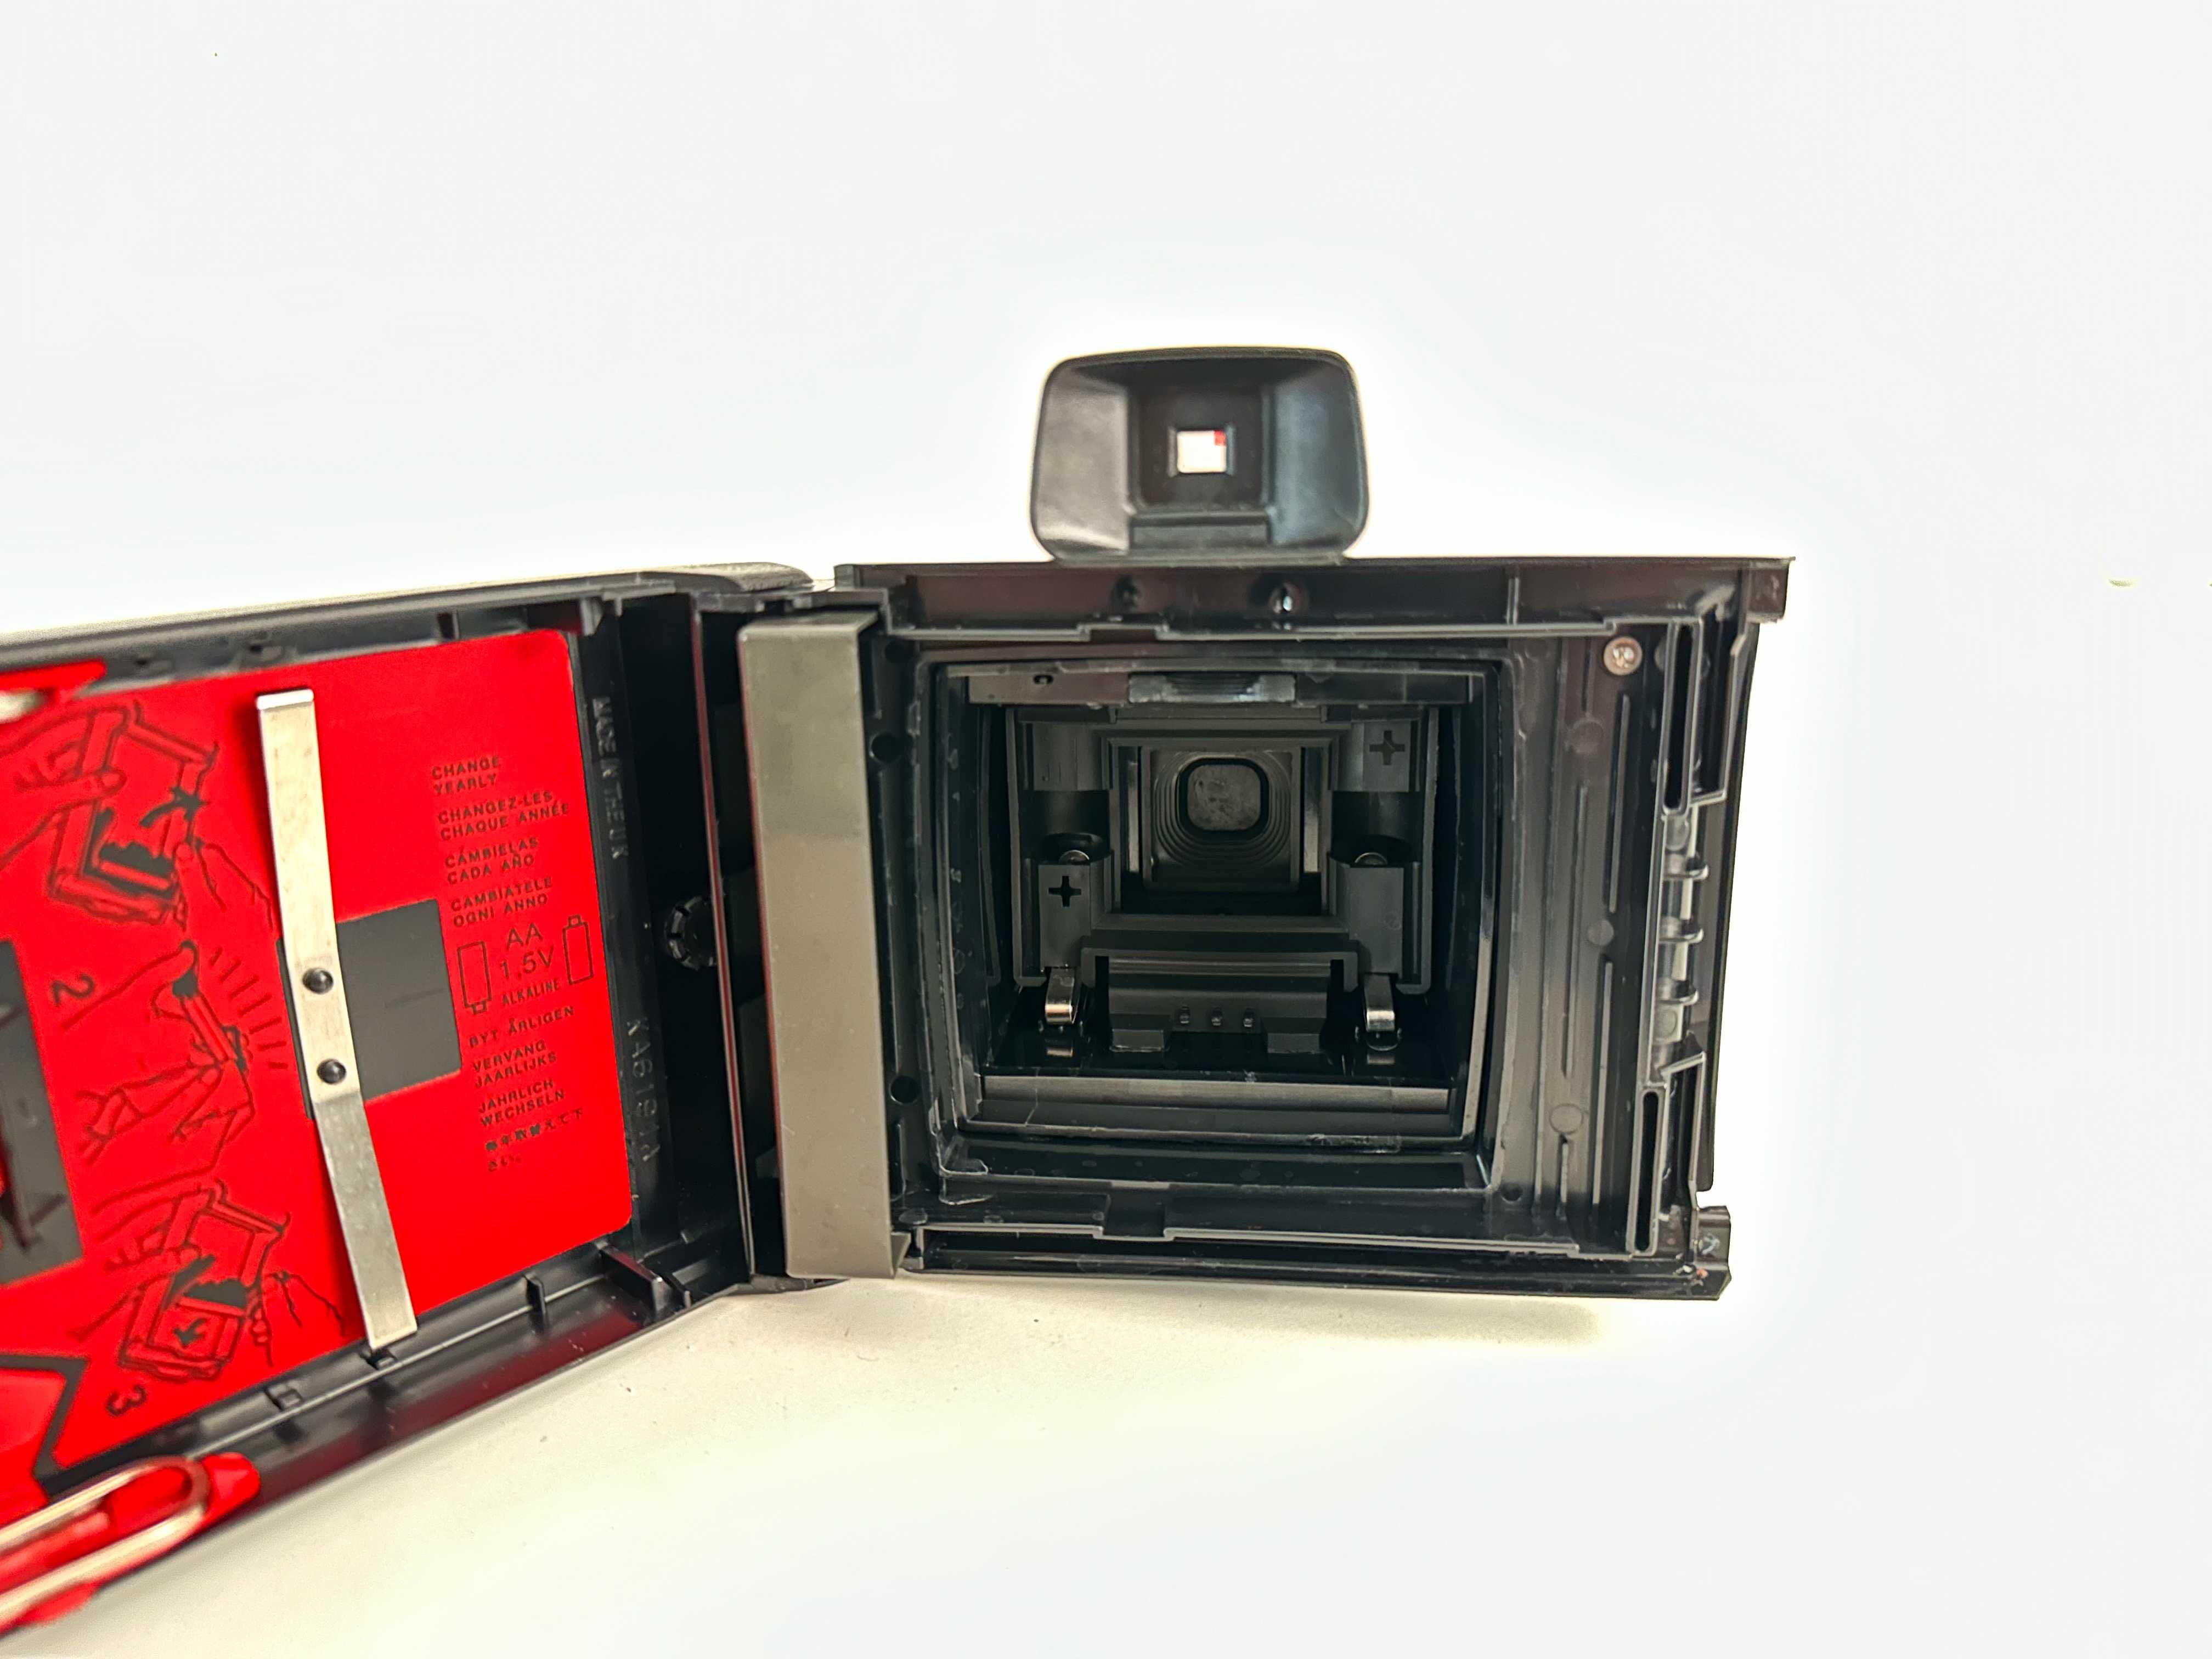 Aparat Polaroid Land Camera E44 komplet